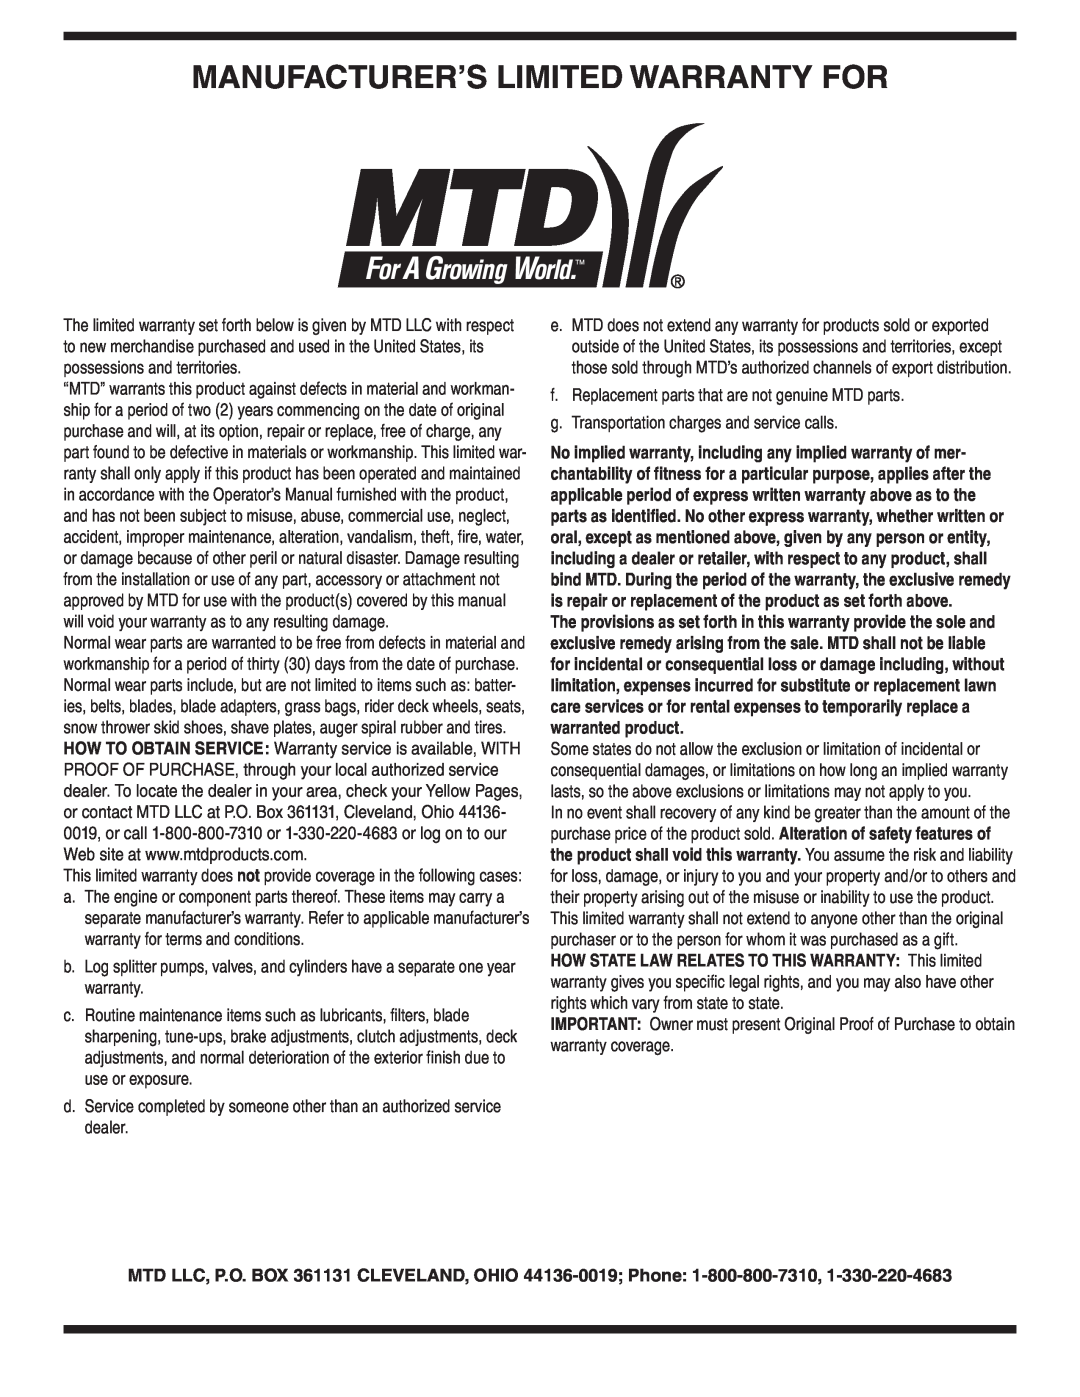 MTD 80 warranty Manufacturer’S Limited Warranty For 